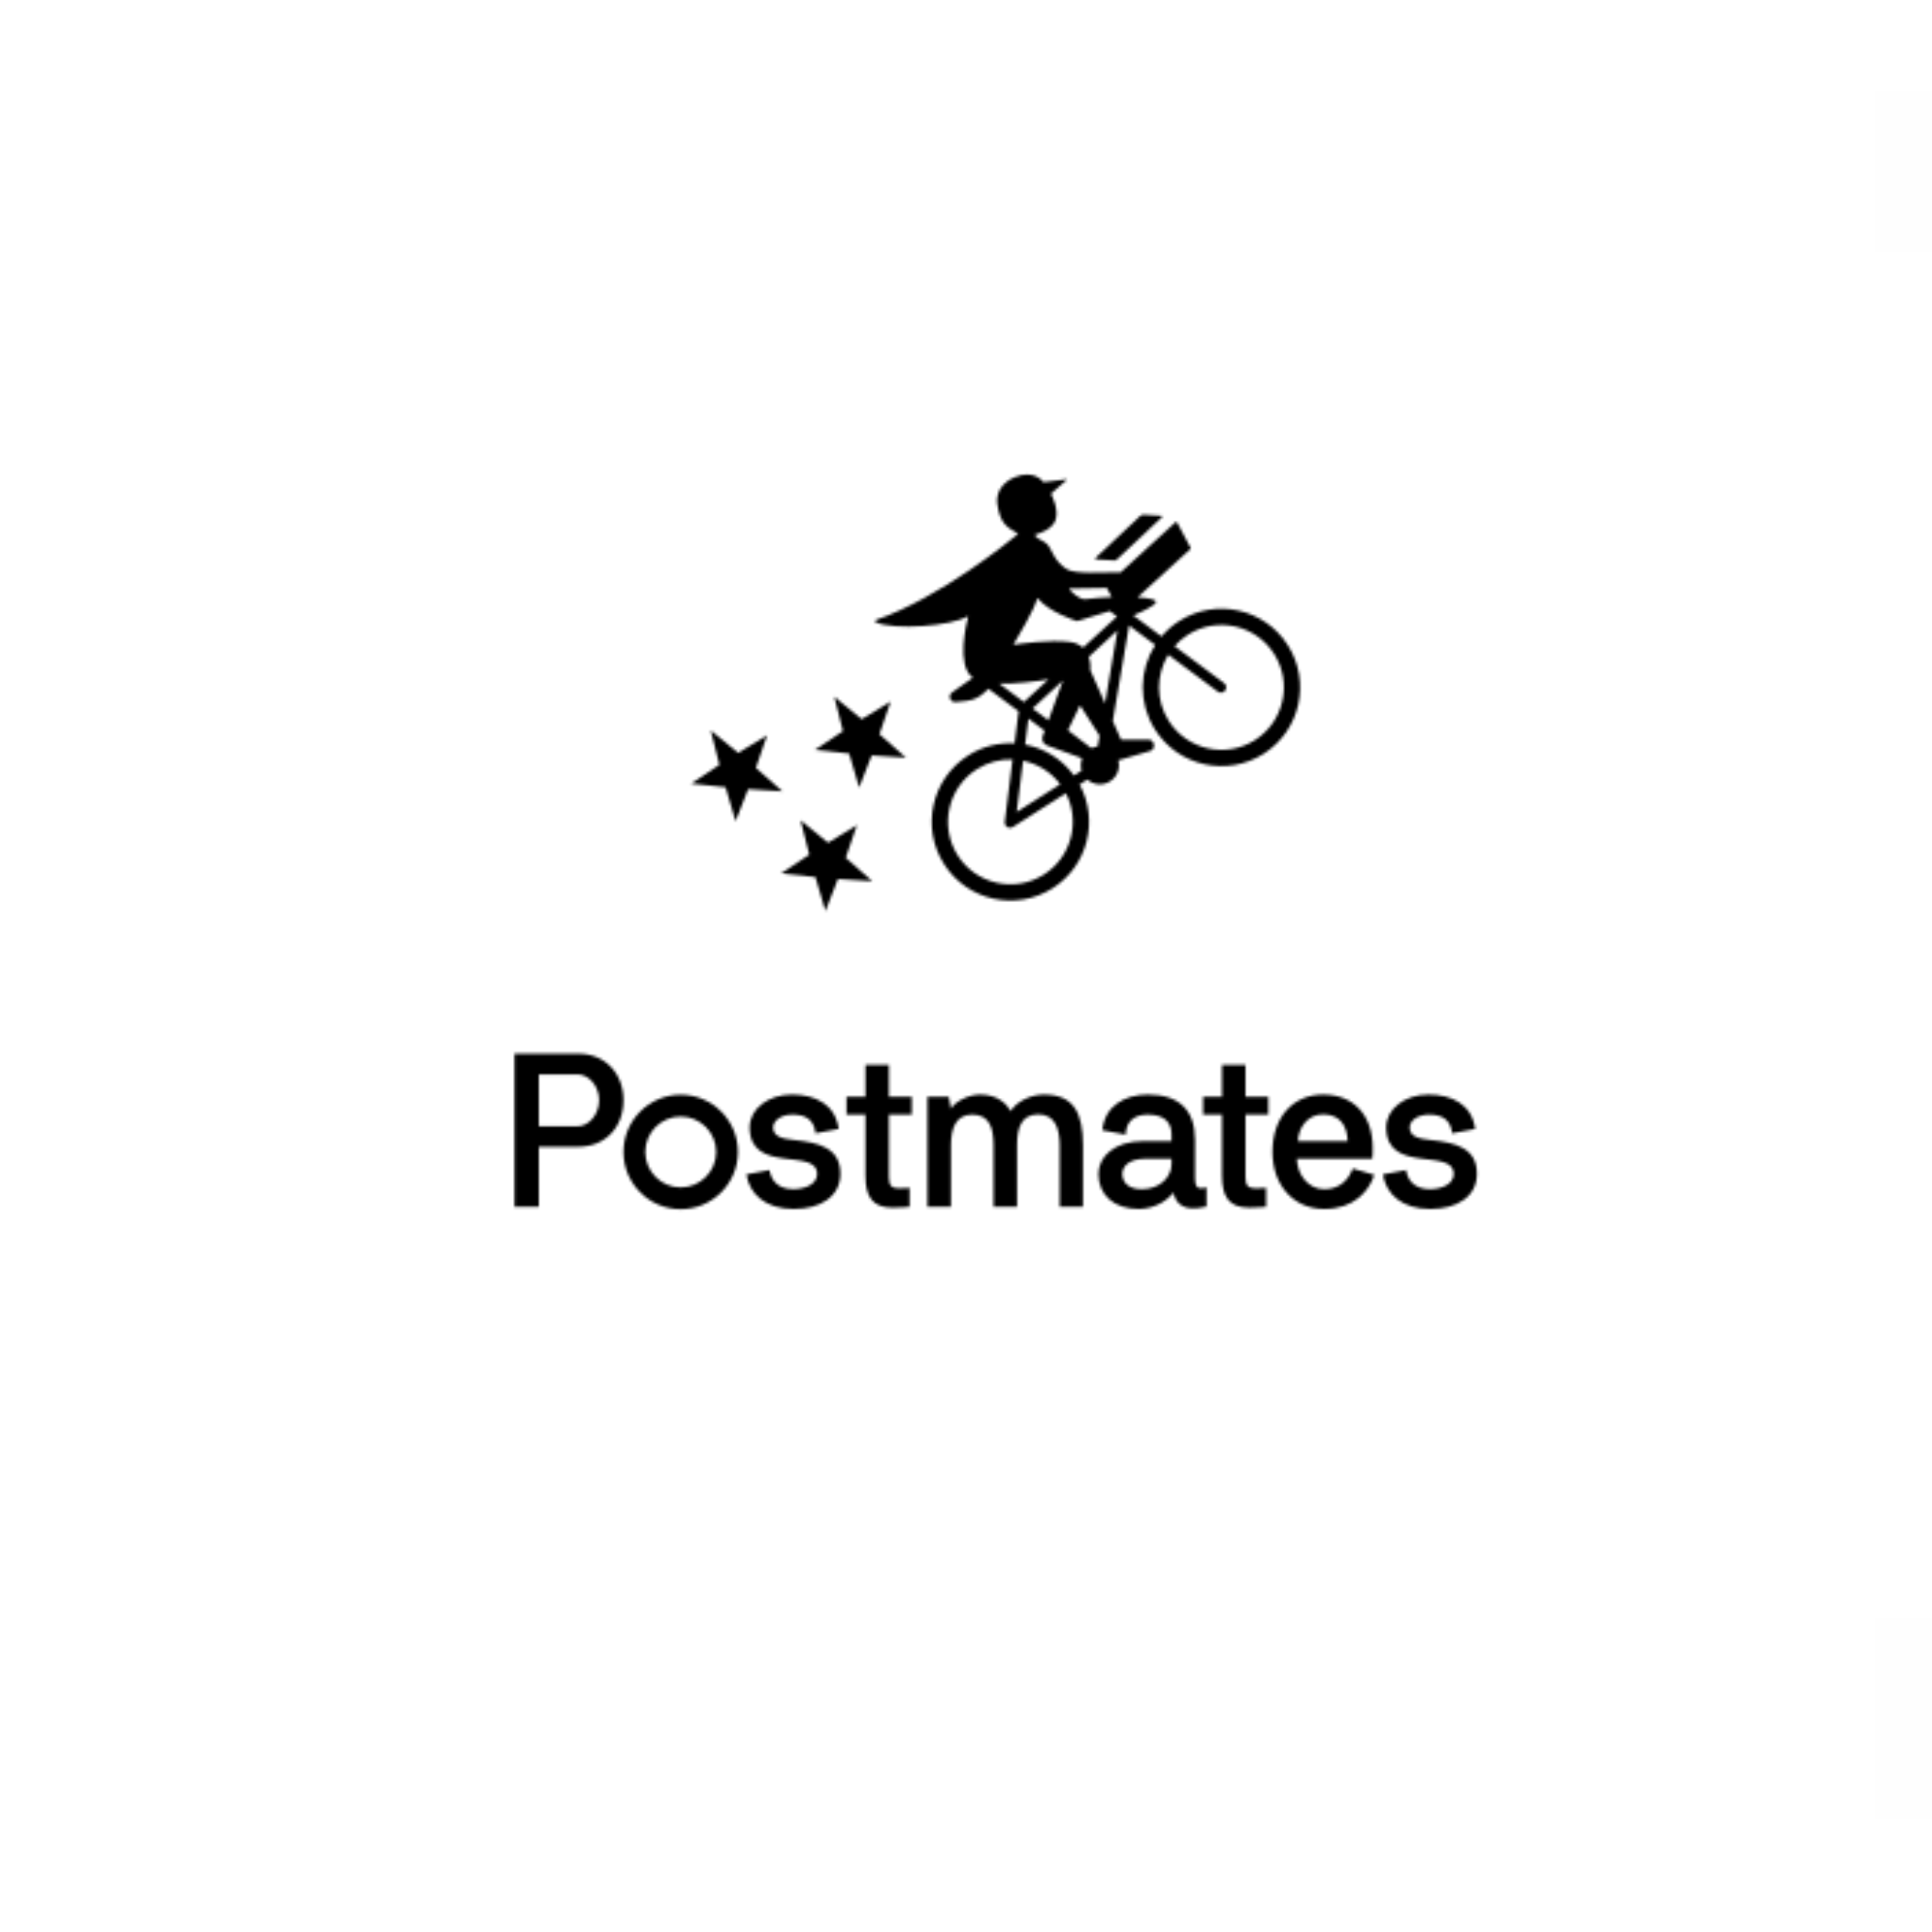 Get $15 Off Your Next Postmates Order